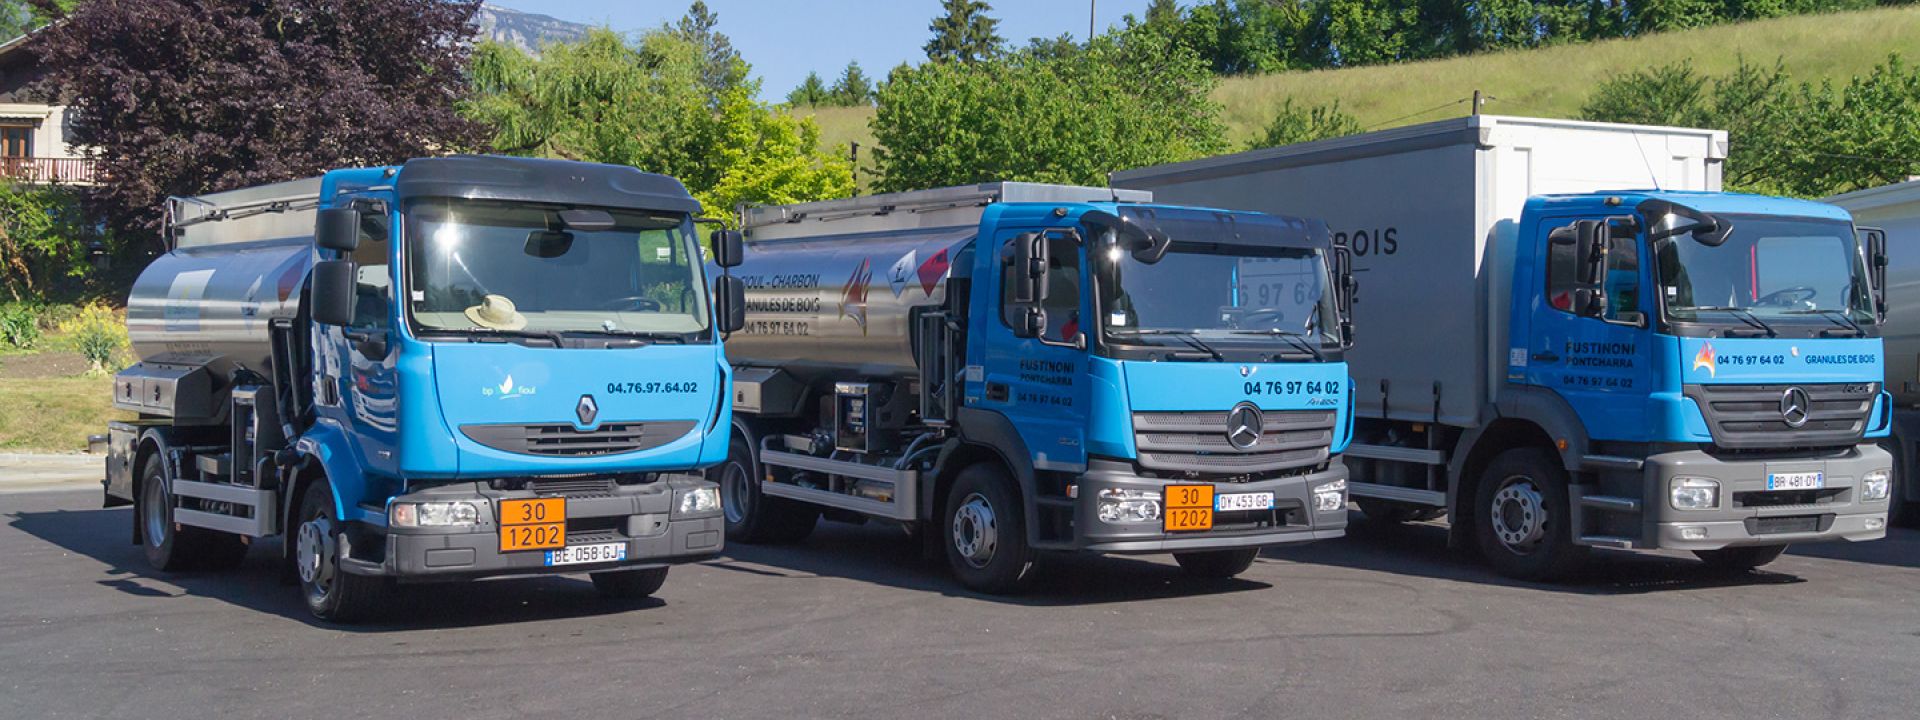 Flotte de camion FUSTINONI Combustibles